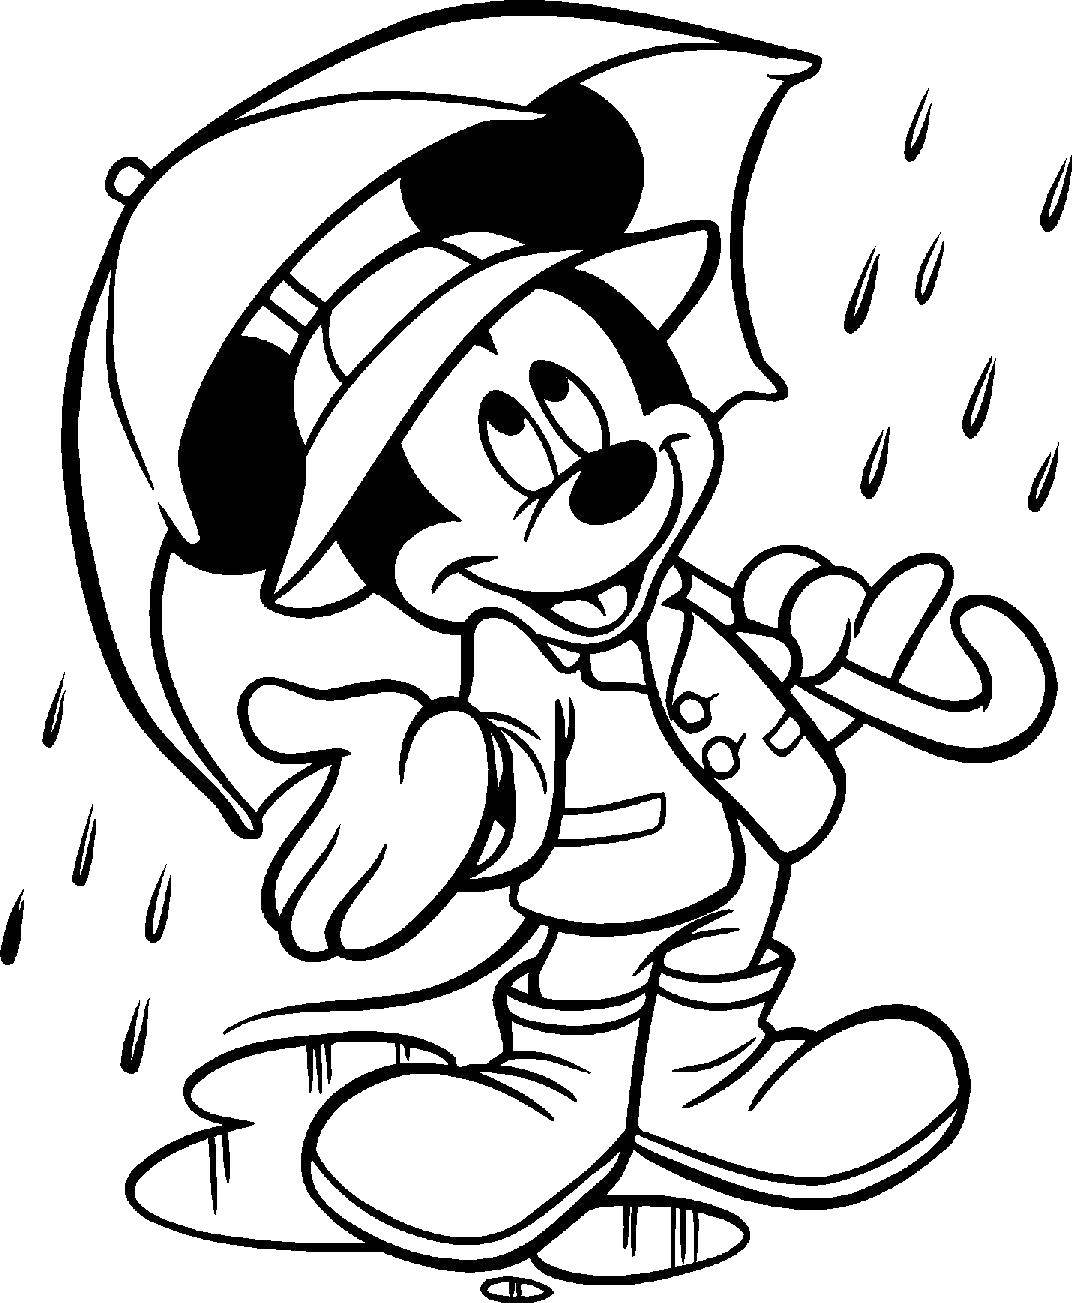 Coloring Mickey in the rain. Category rain. Tags:  rain, Mickey mouse, umbrella.